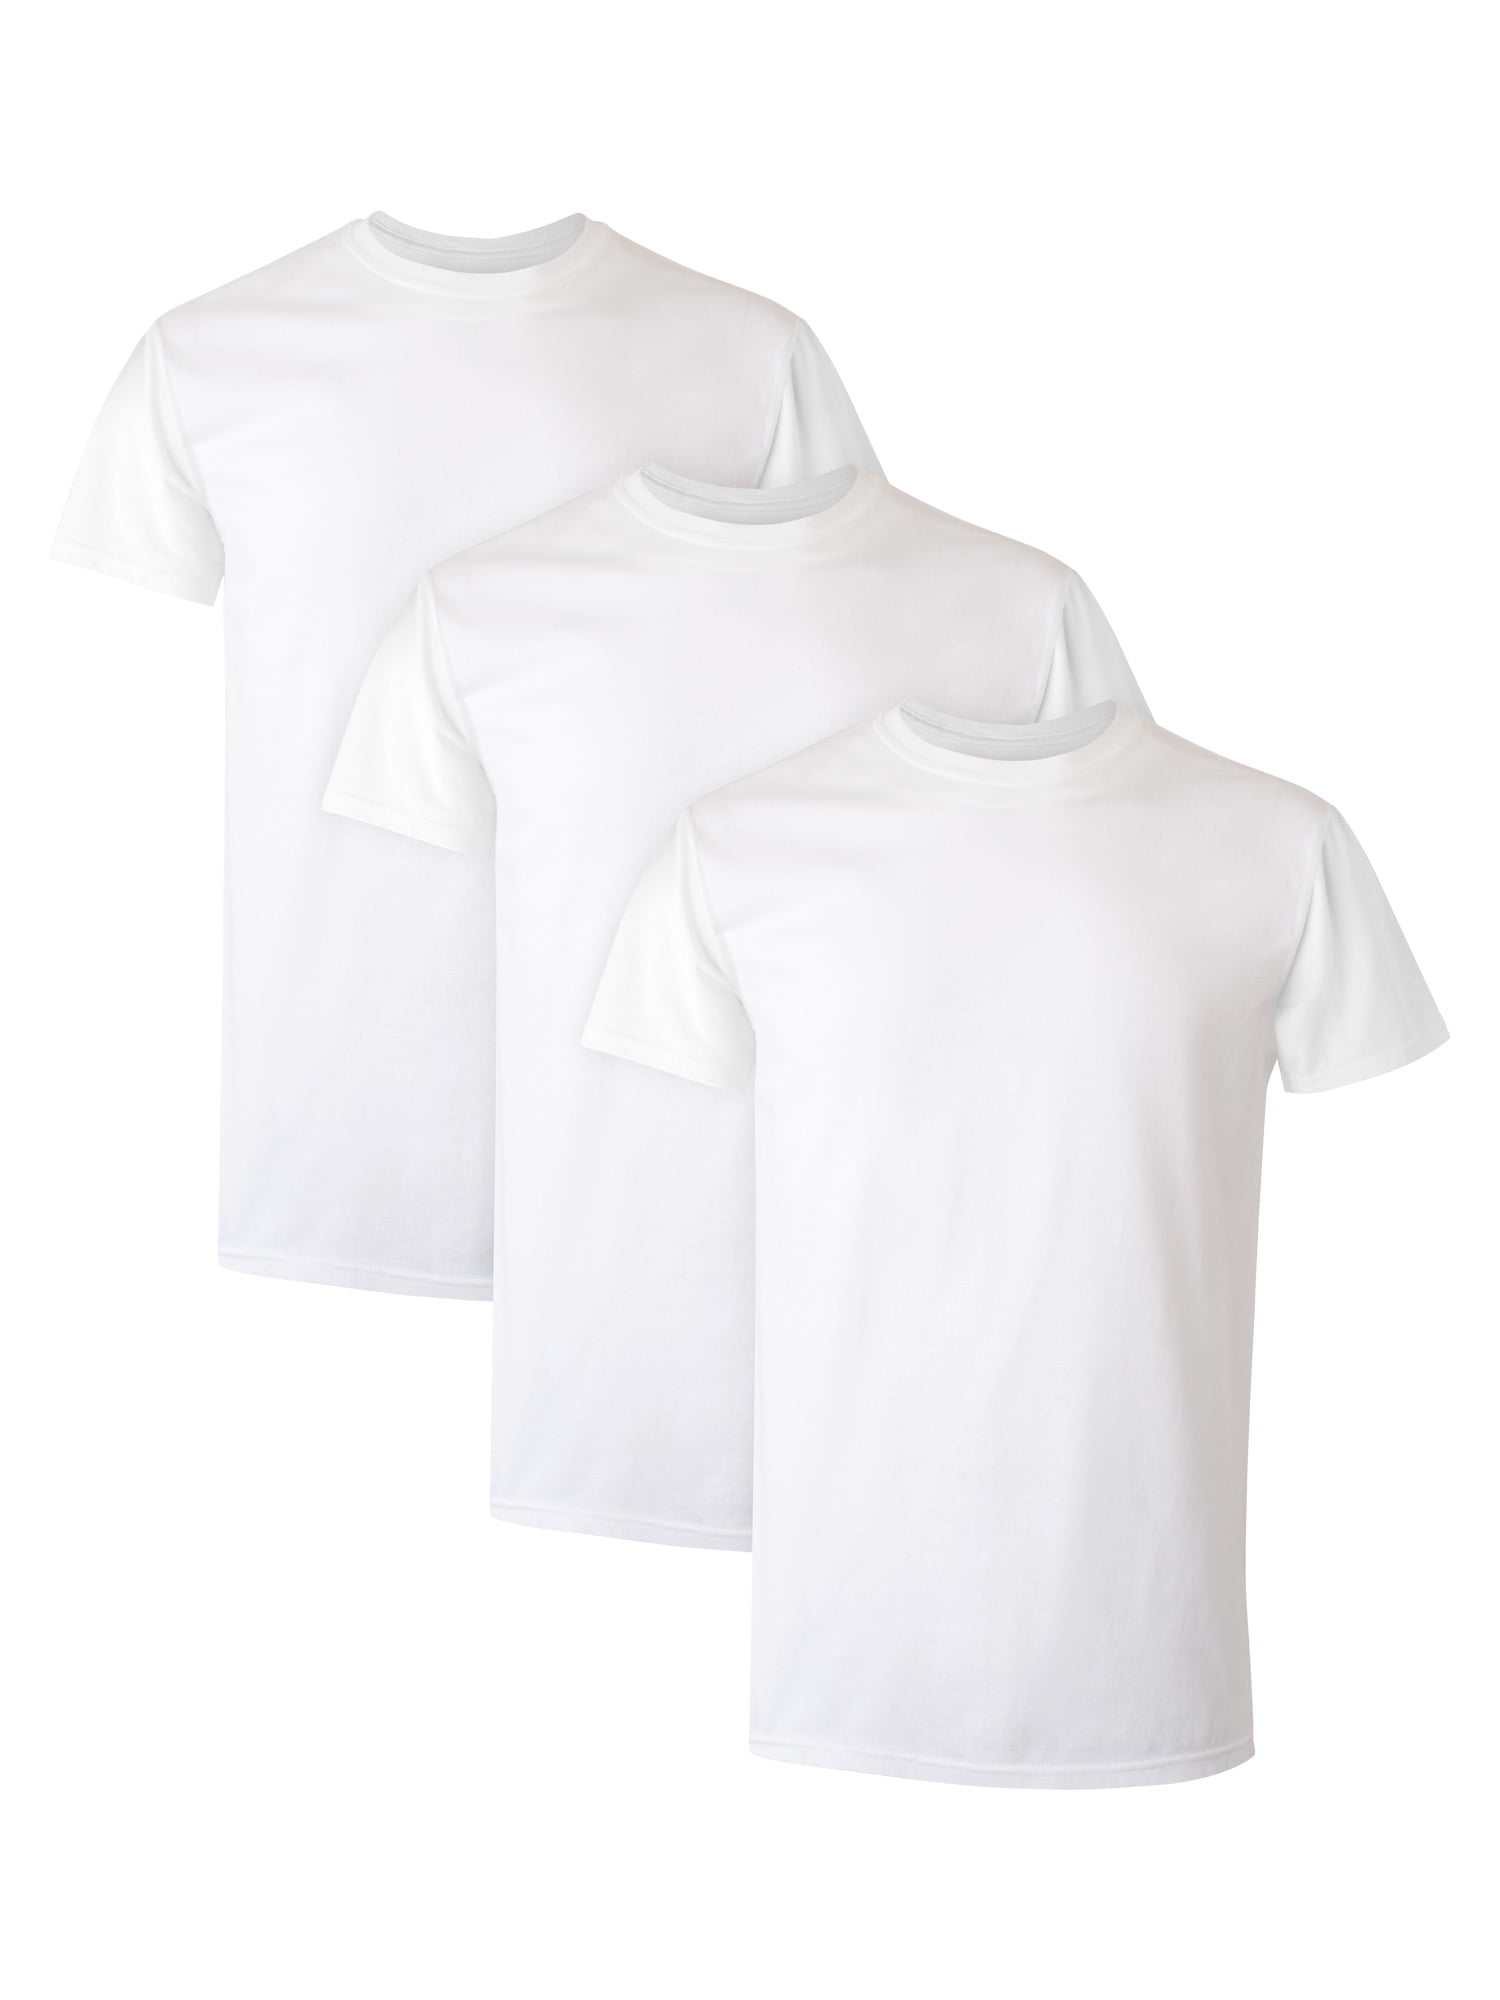 Hanes Men's Comfort Fit Ultra Soft Cotton White Crew T-Shirt ...